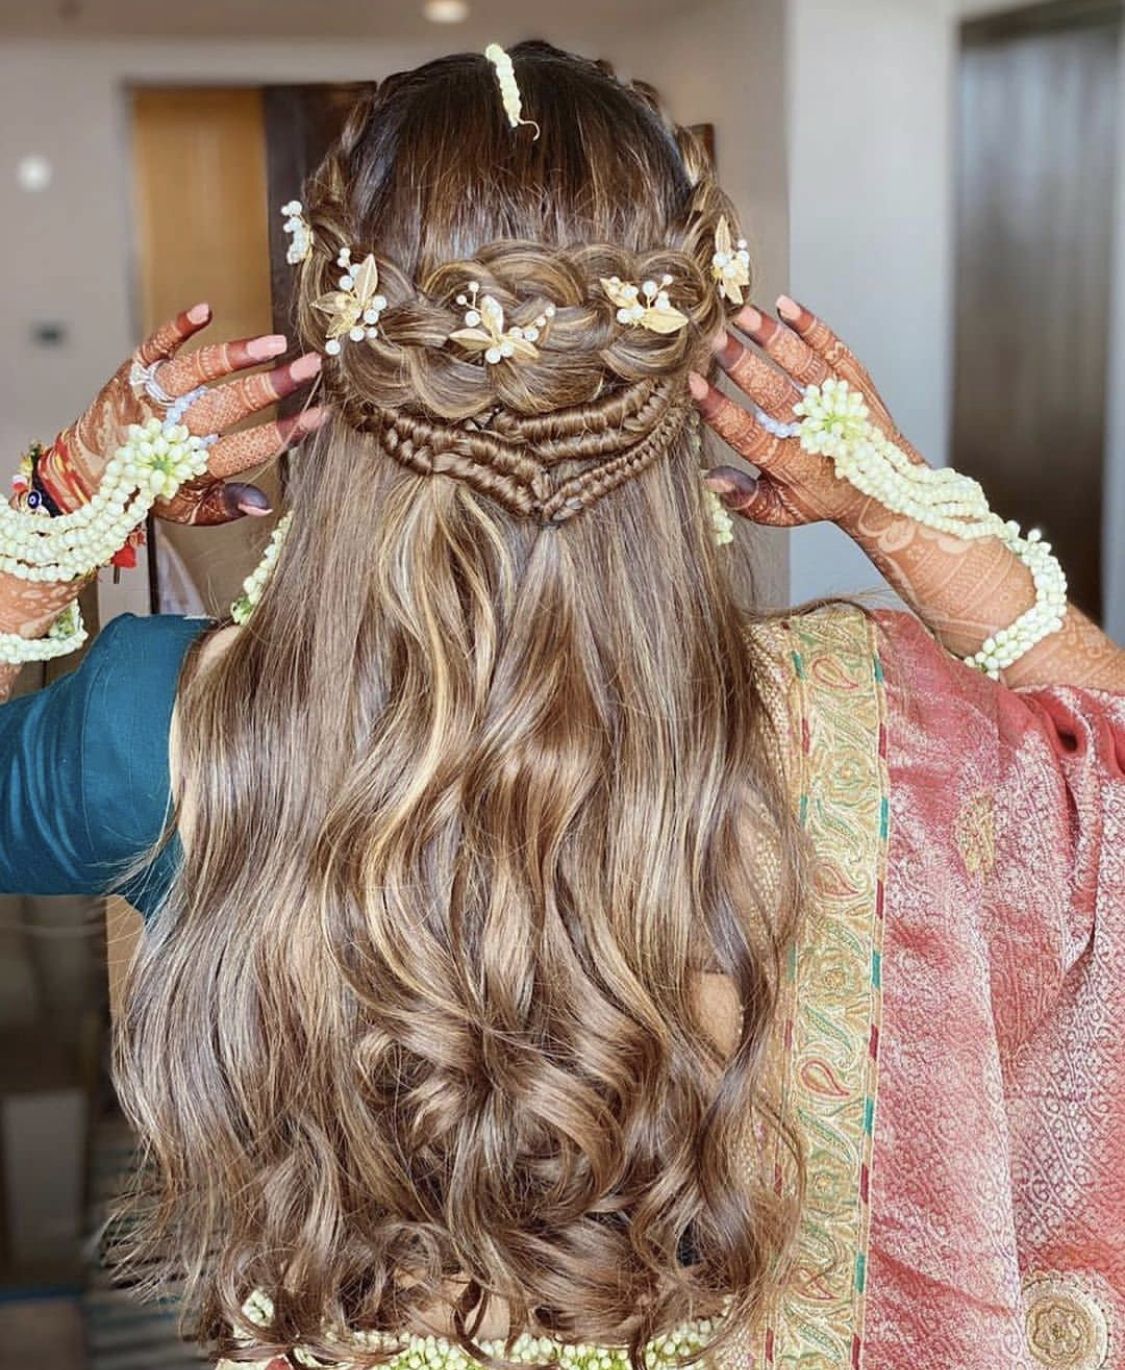 Mehndi | Indian Wedding Tradition